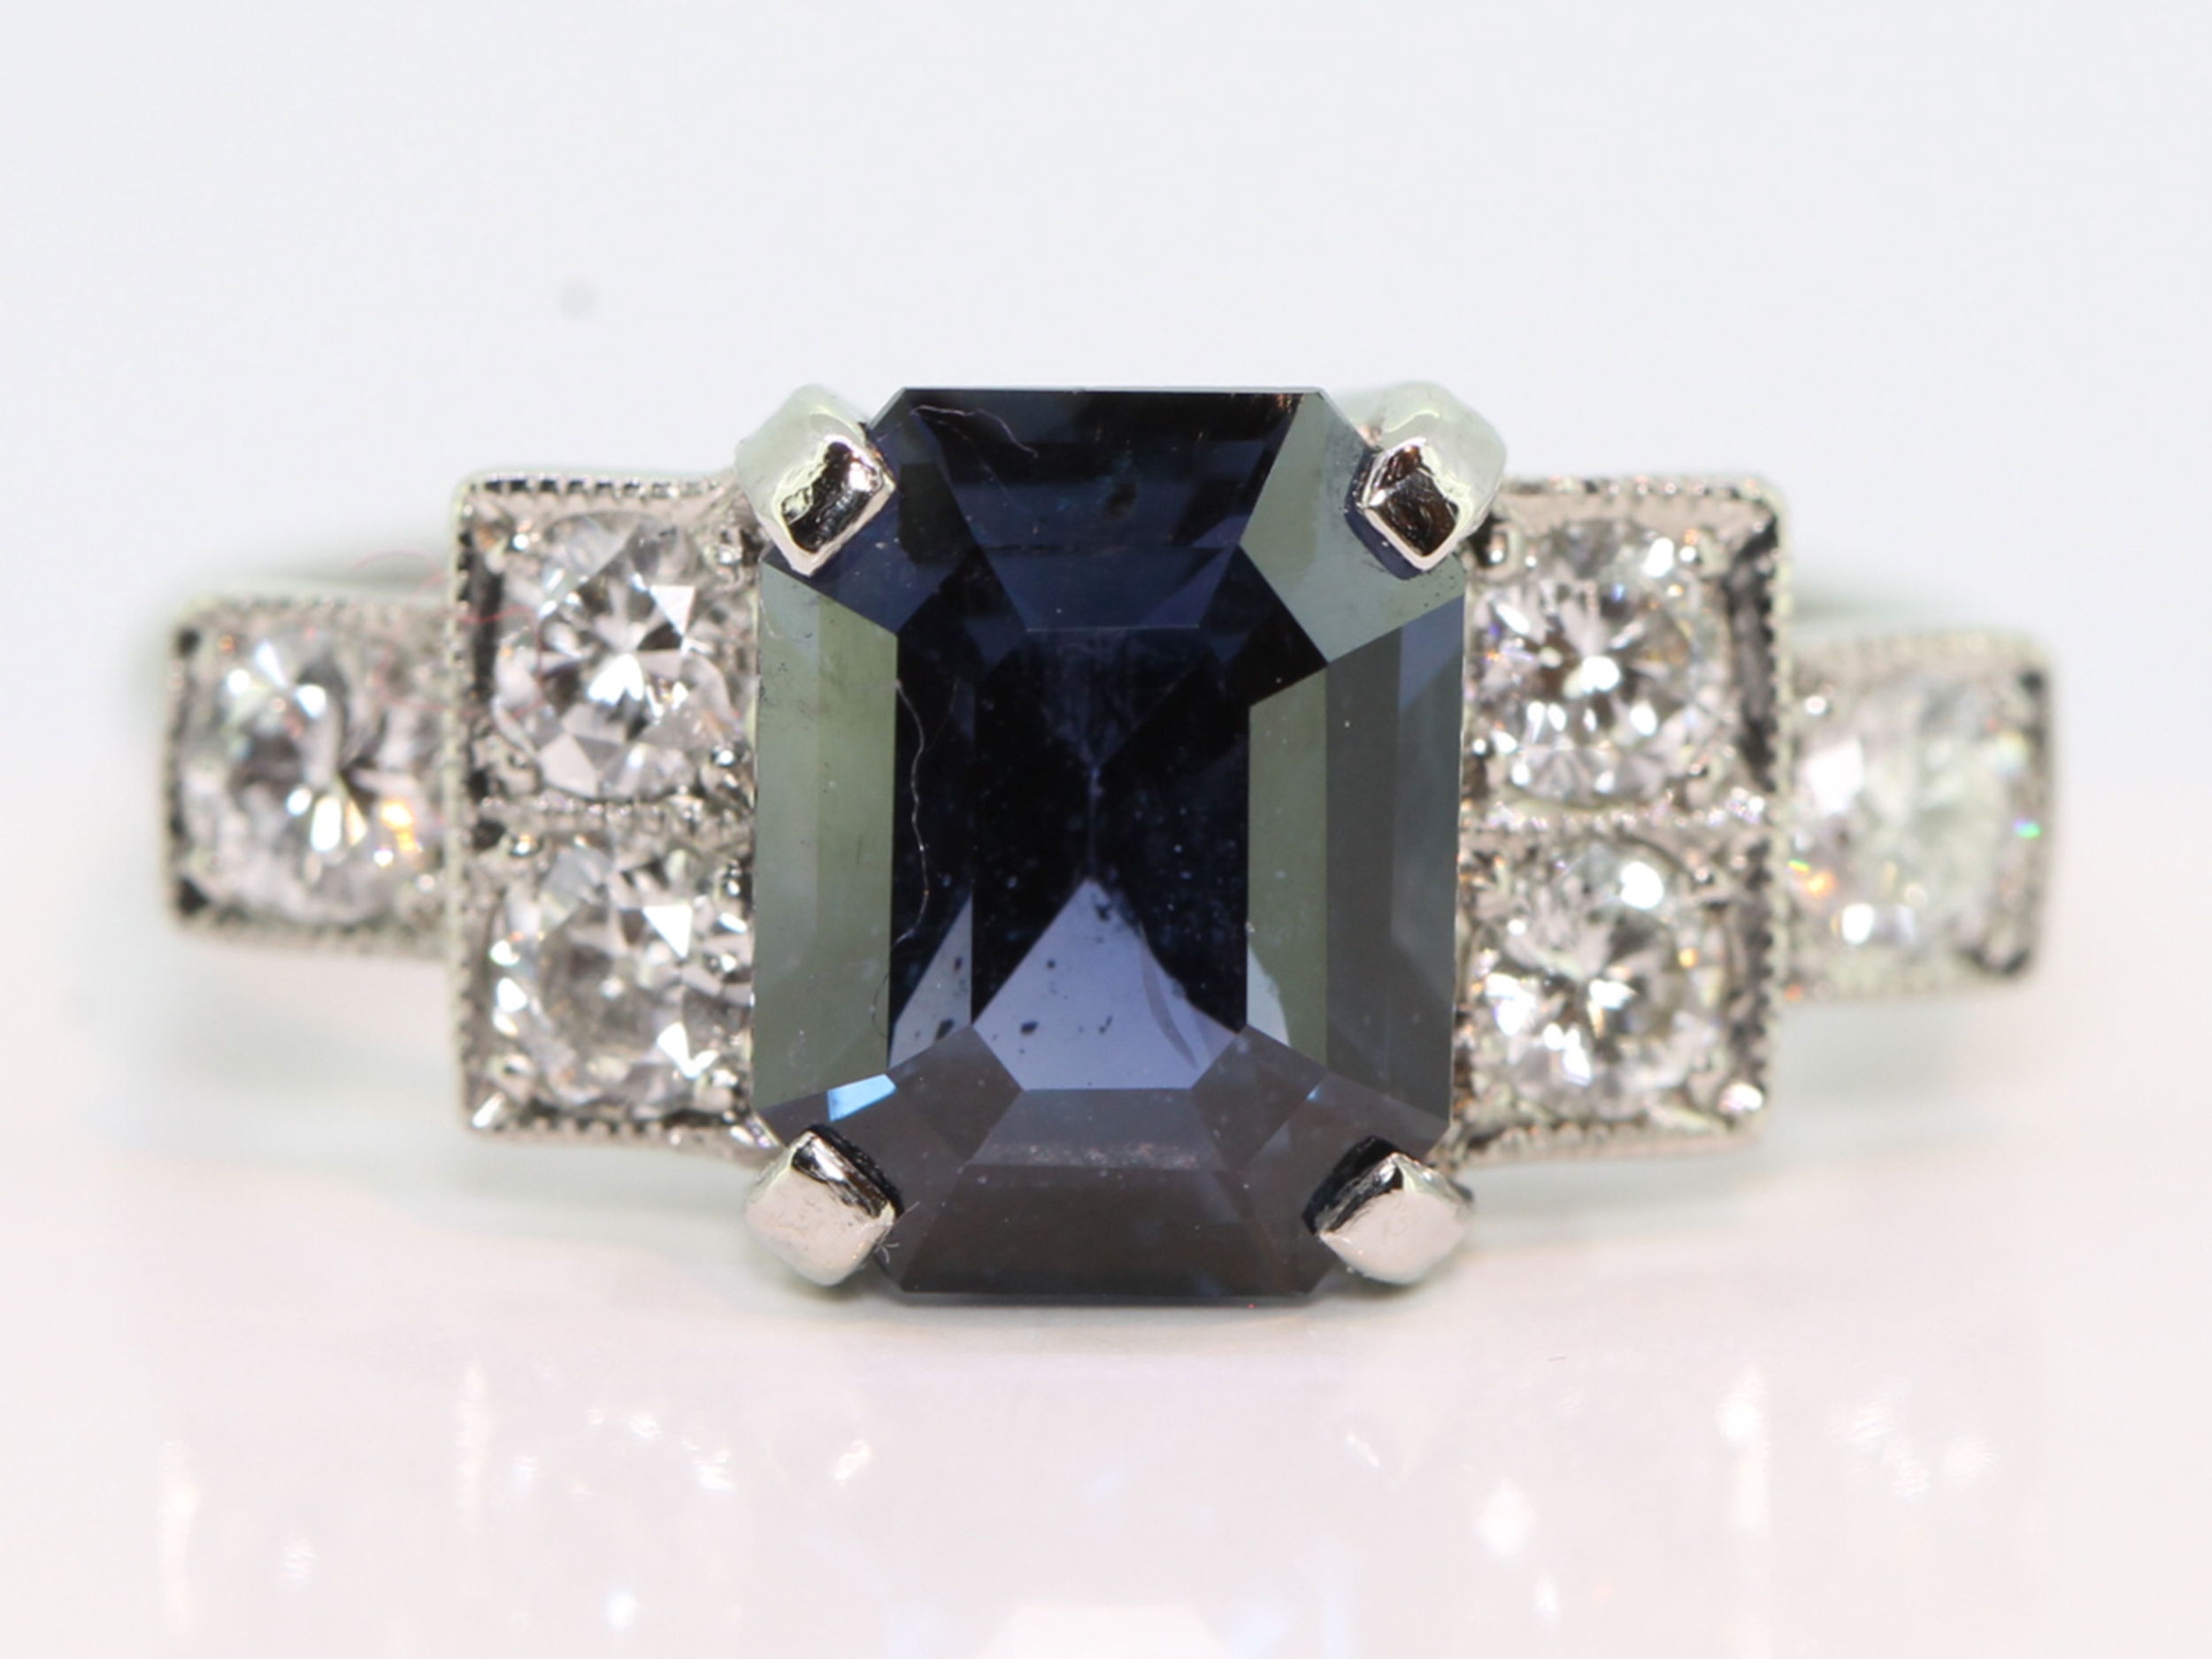 Beautiful sapphire and diamond platinum ring